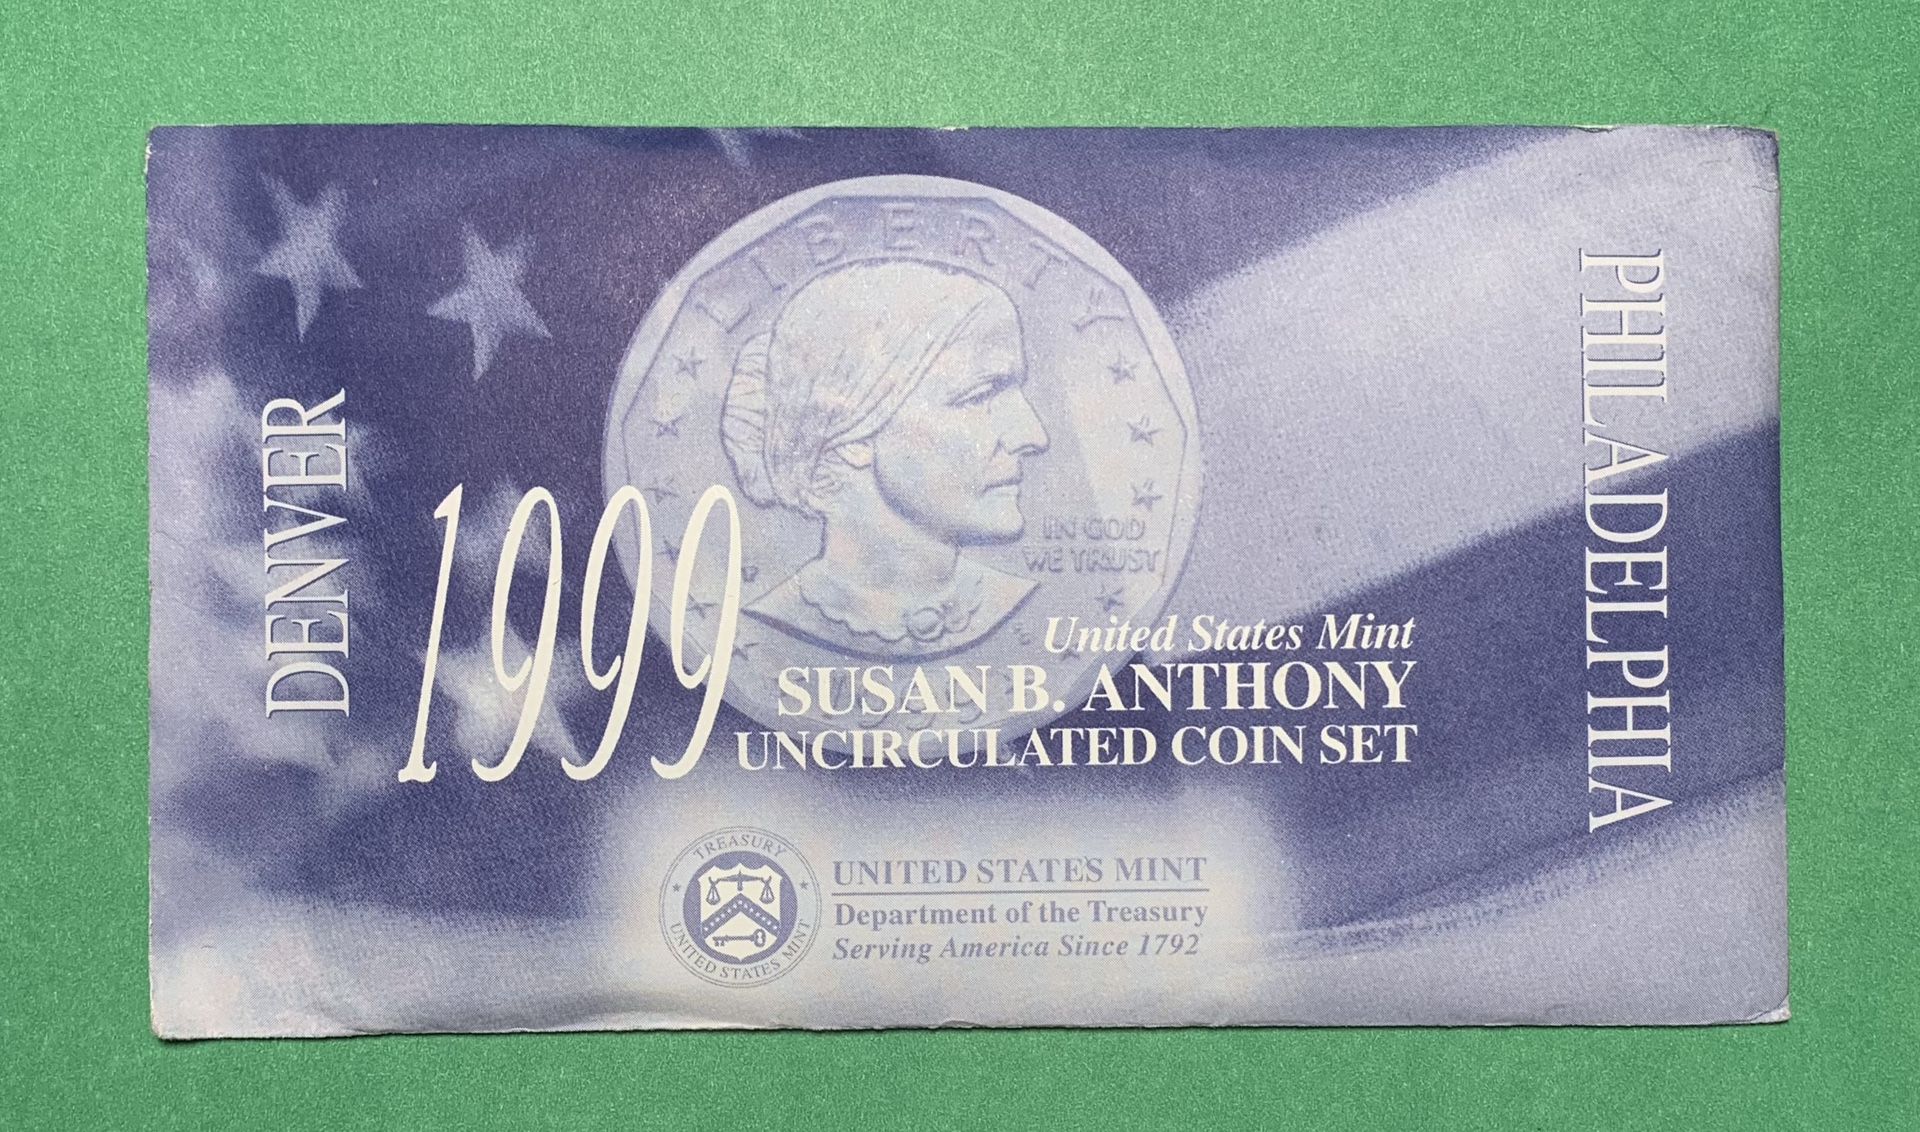 1999 U.S. Mint Susan B. Anthony Uncirculated Coin Set